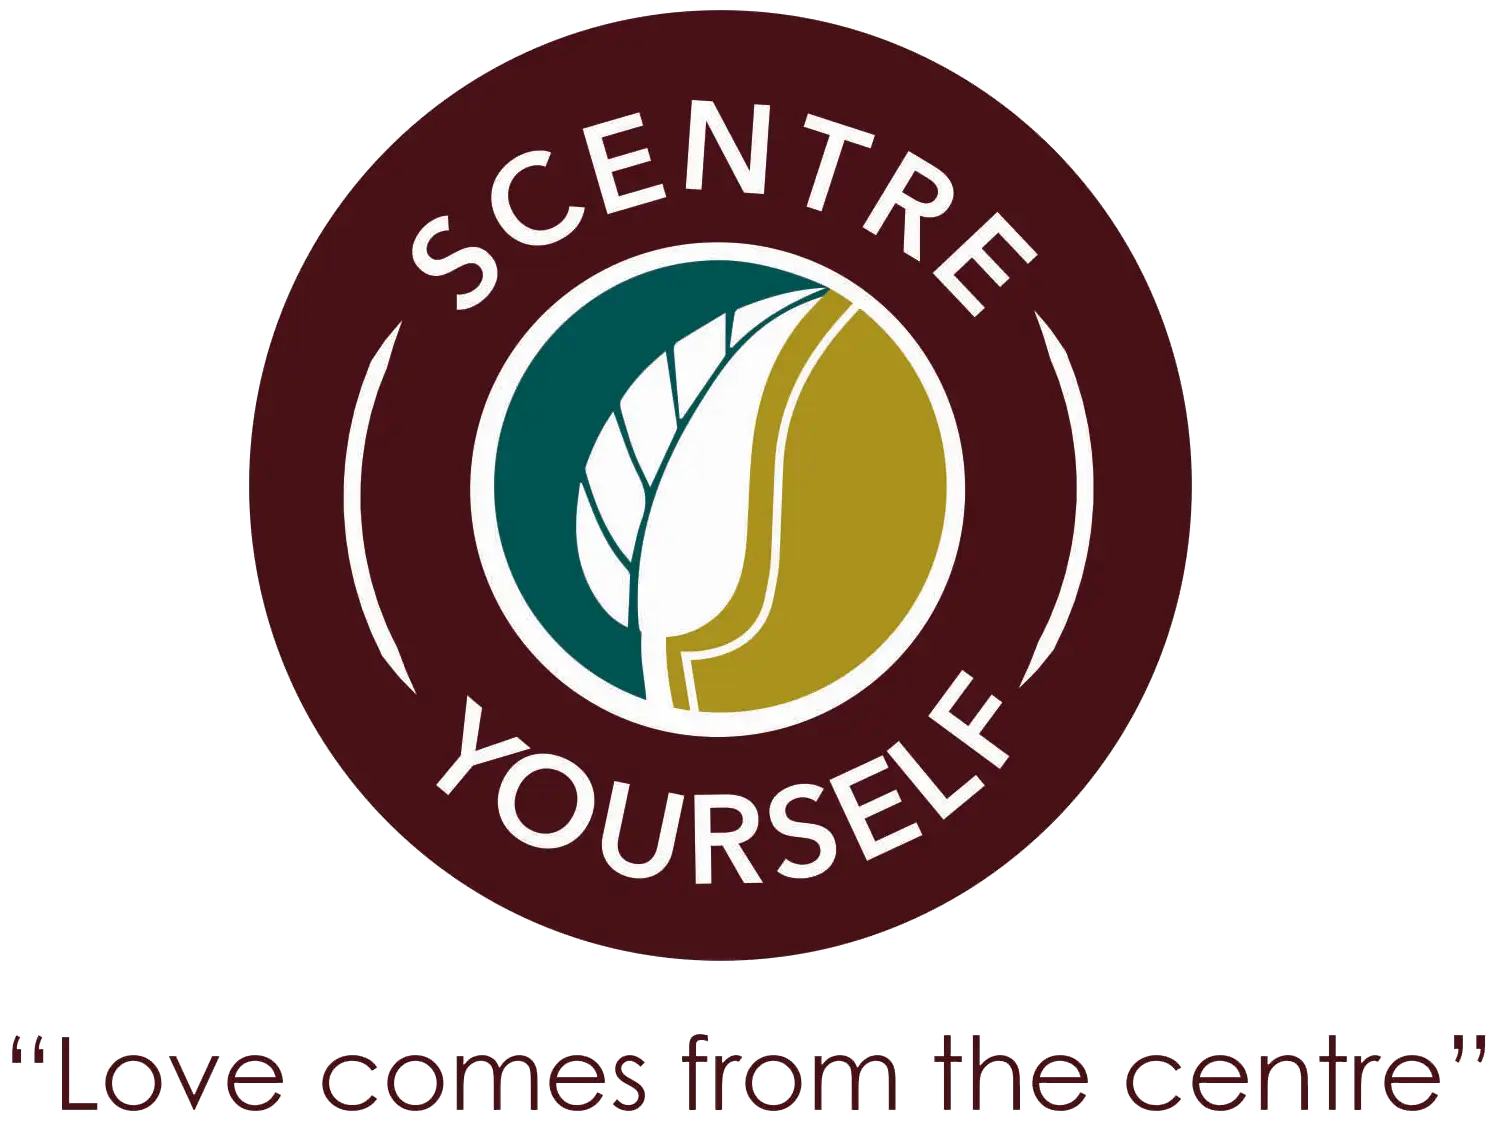 Scentre Yourself logo